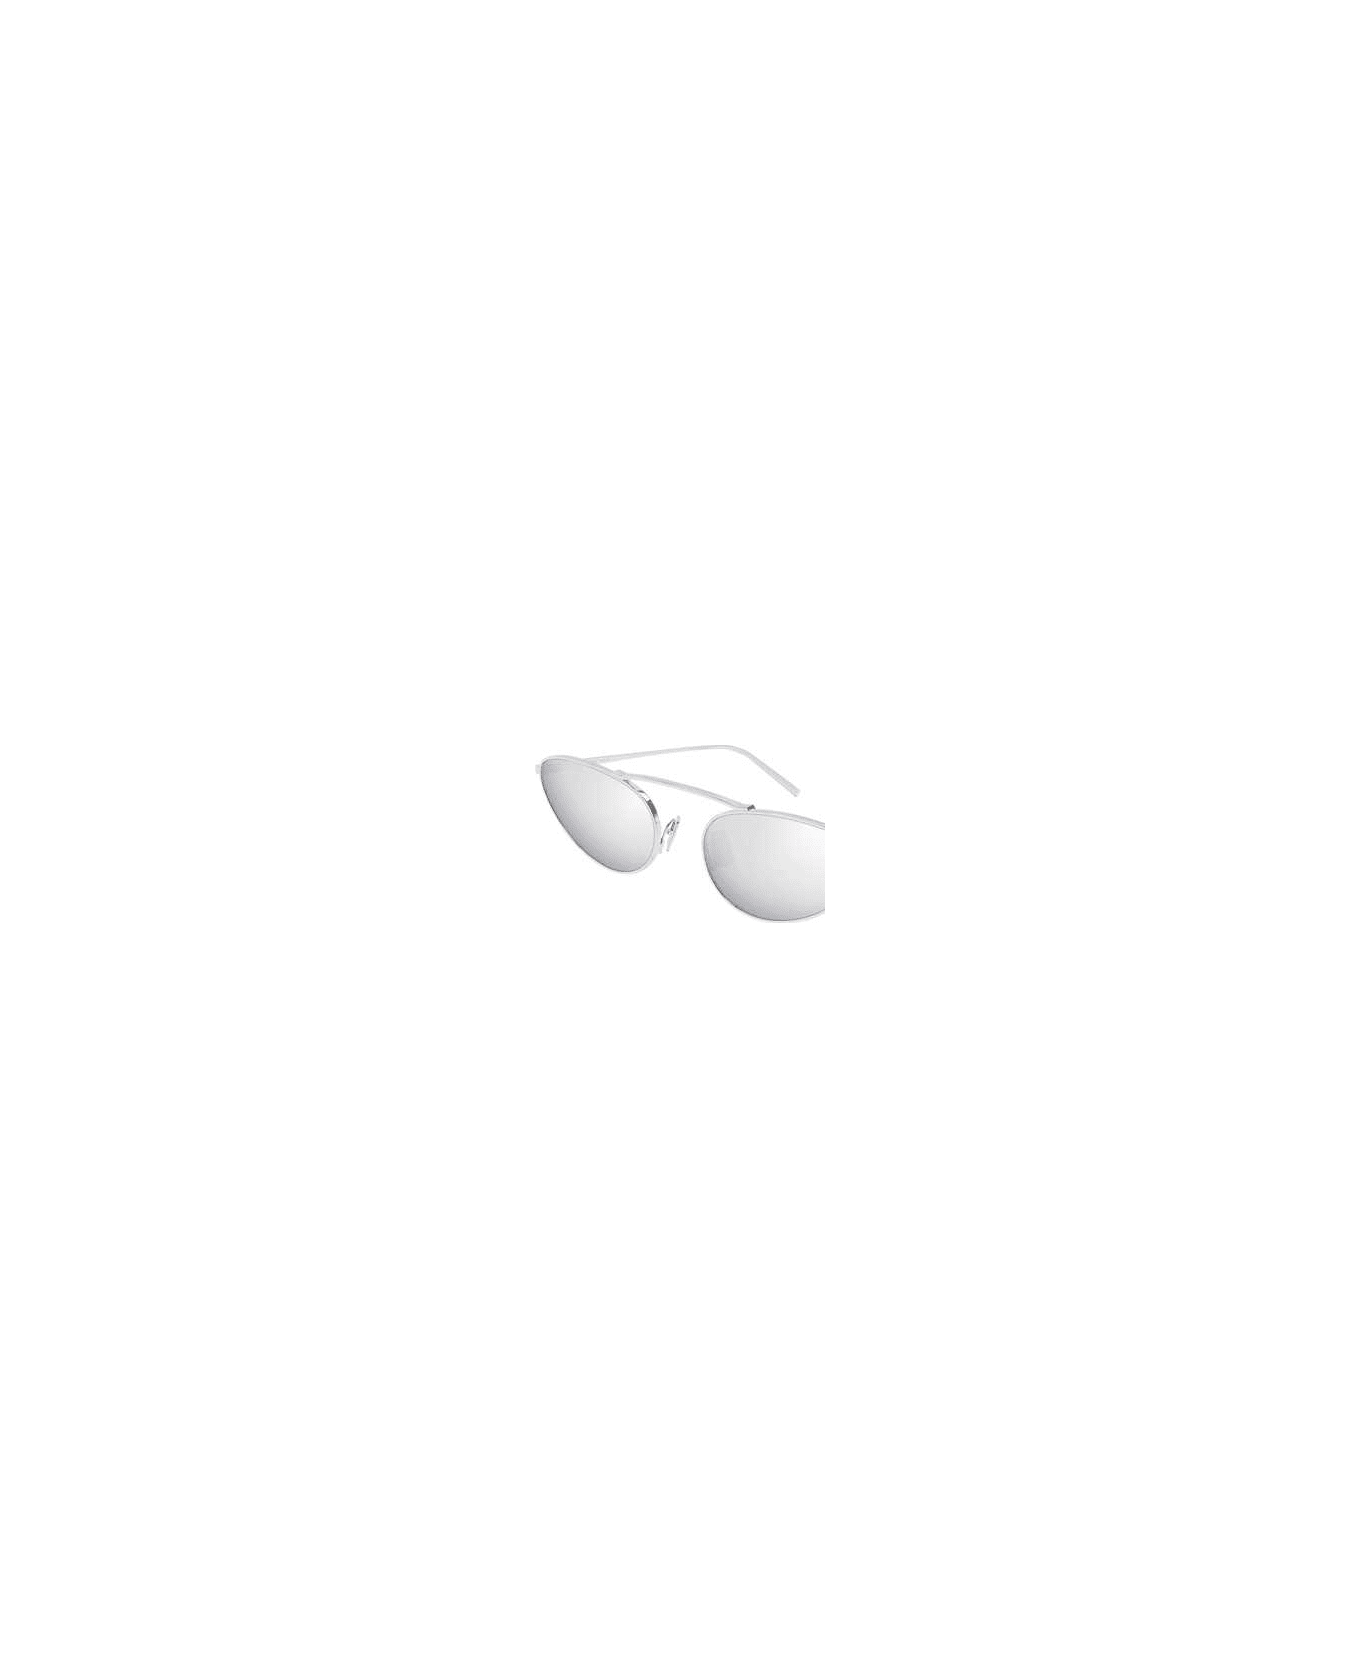 Saint Laurent Eyewear Sl 538 Sunglasses - 004 silver silver silver